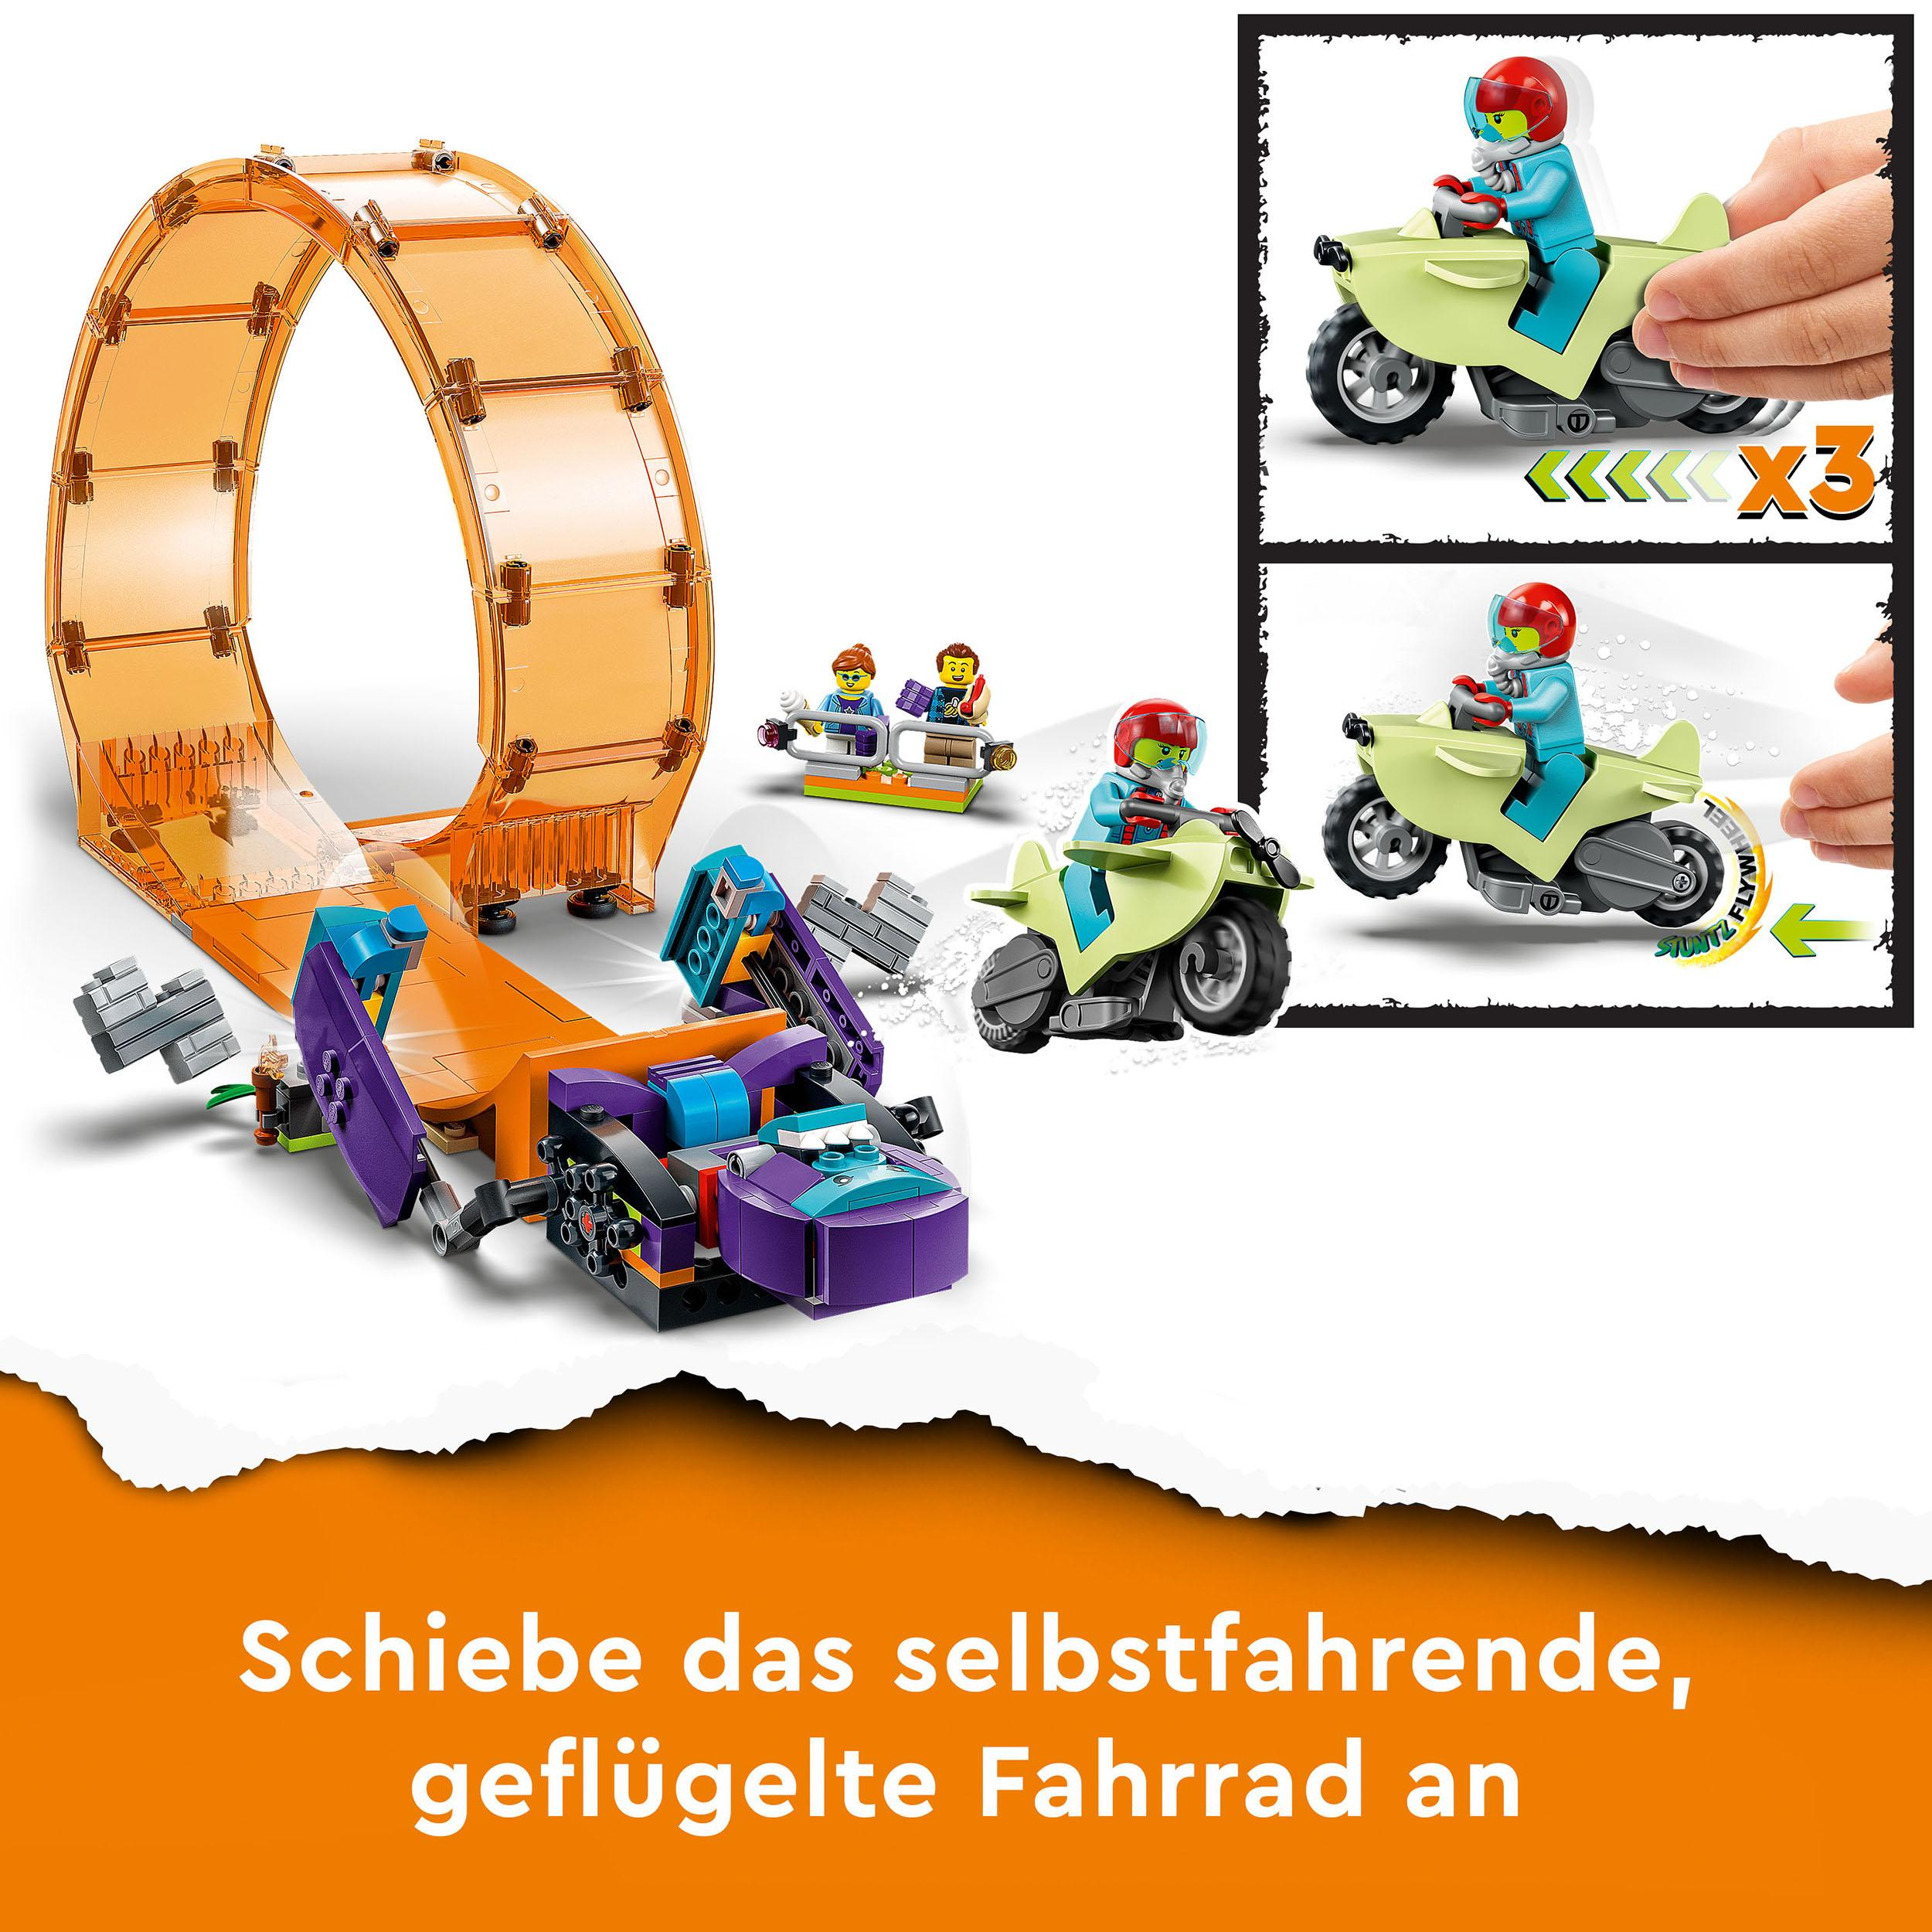 LEGO City Bausatz, Mehrfarbig Schimpansen-Stuntlooping 60338 Stuntz